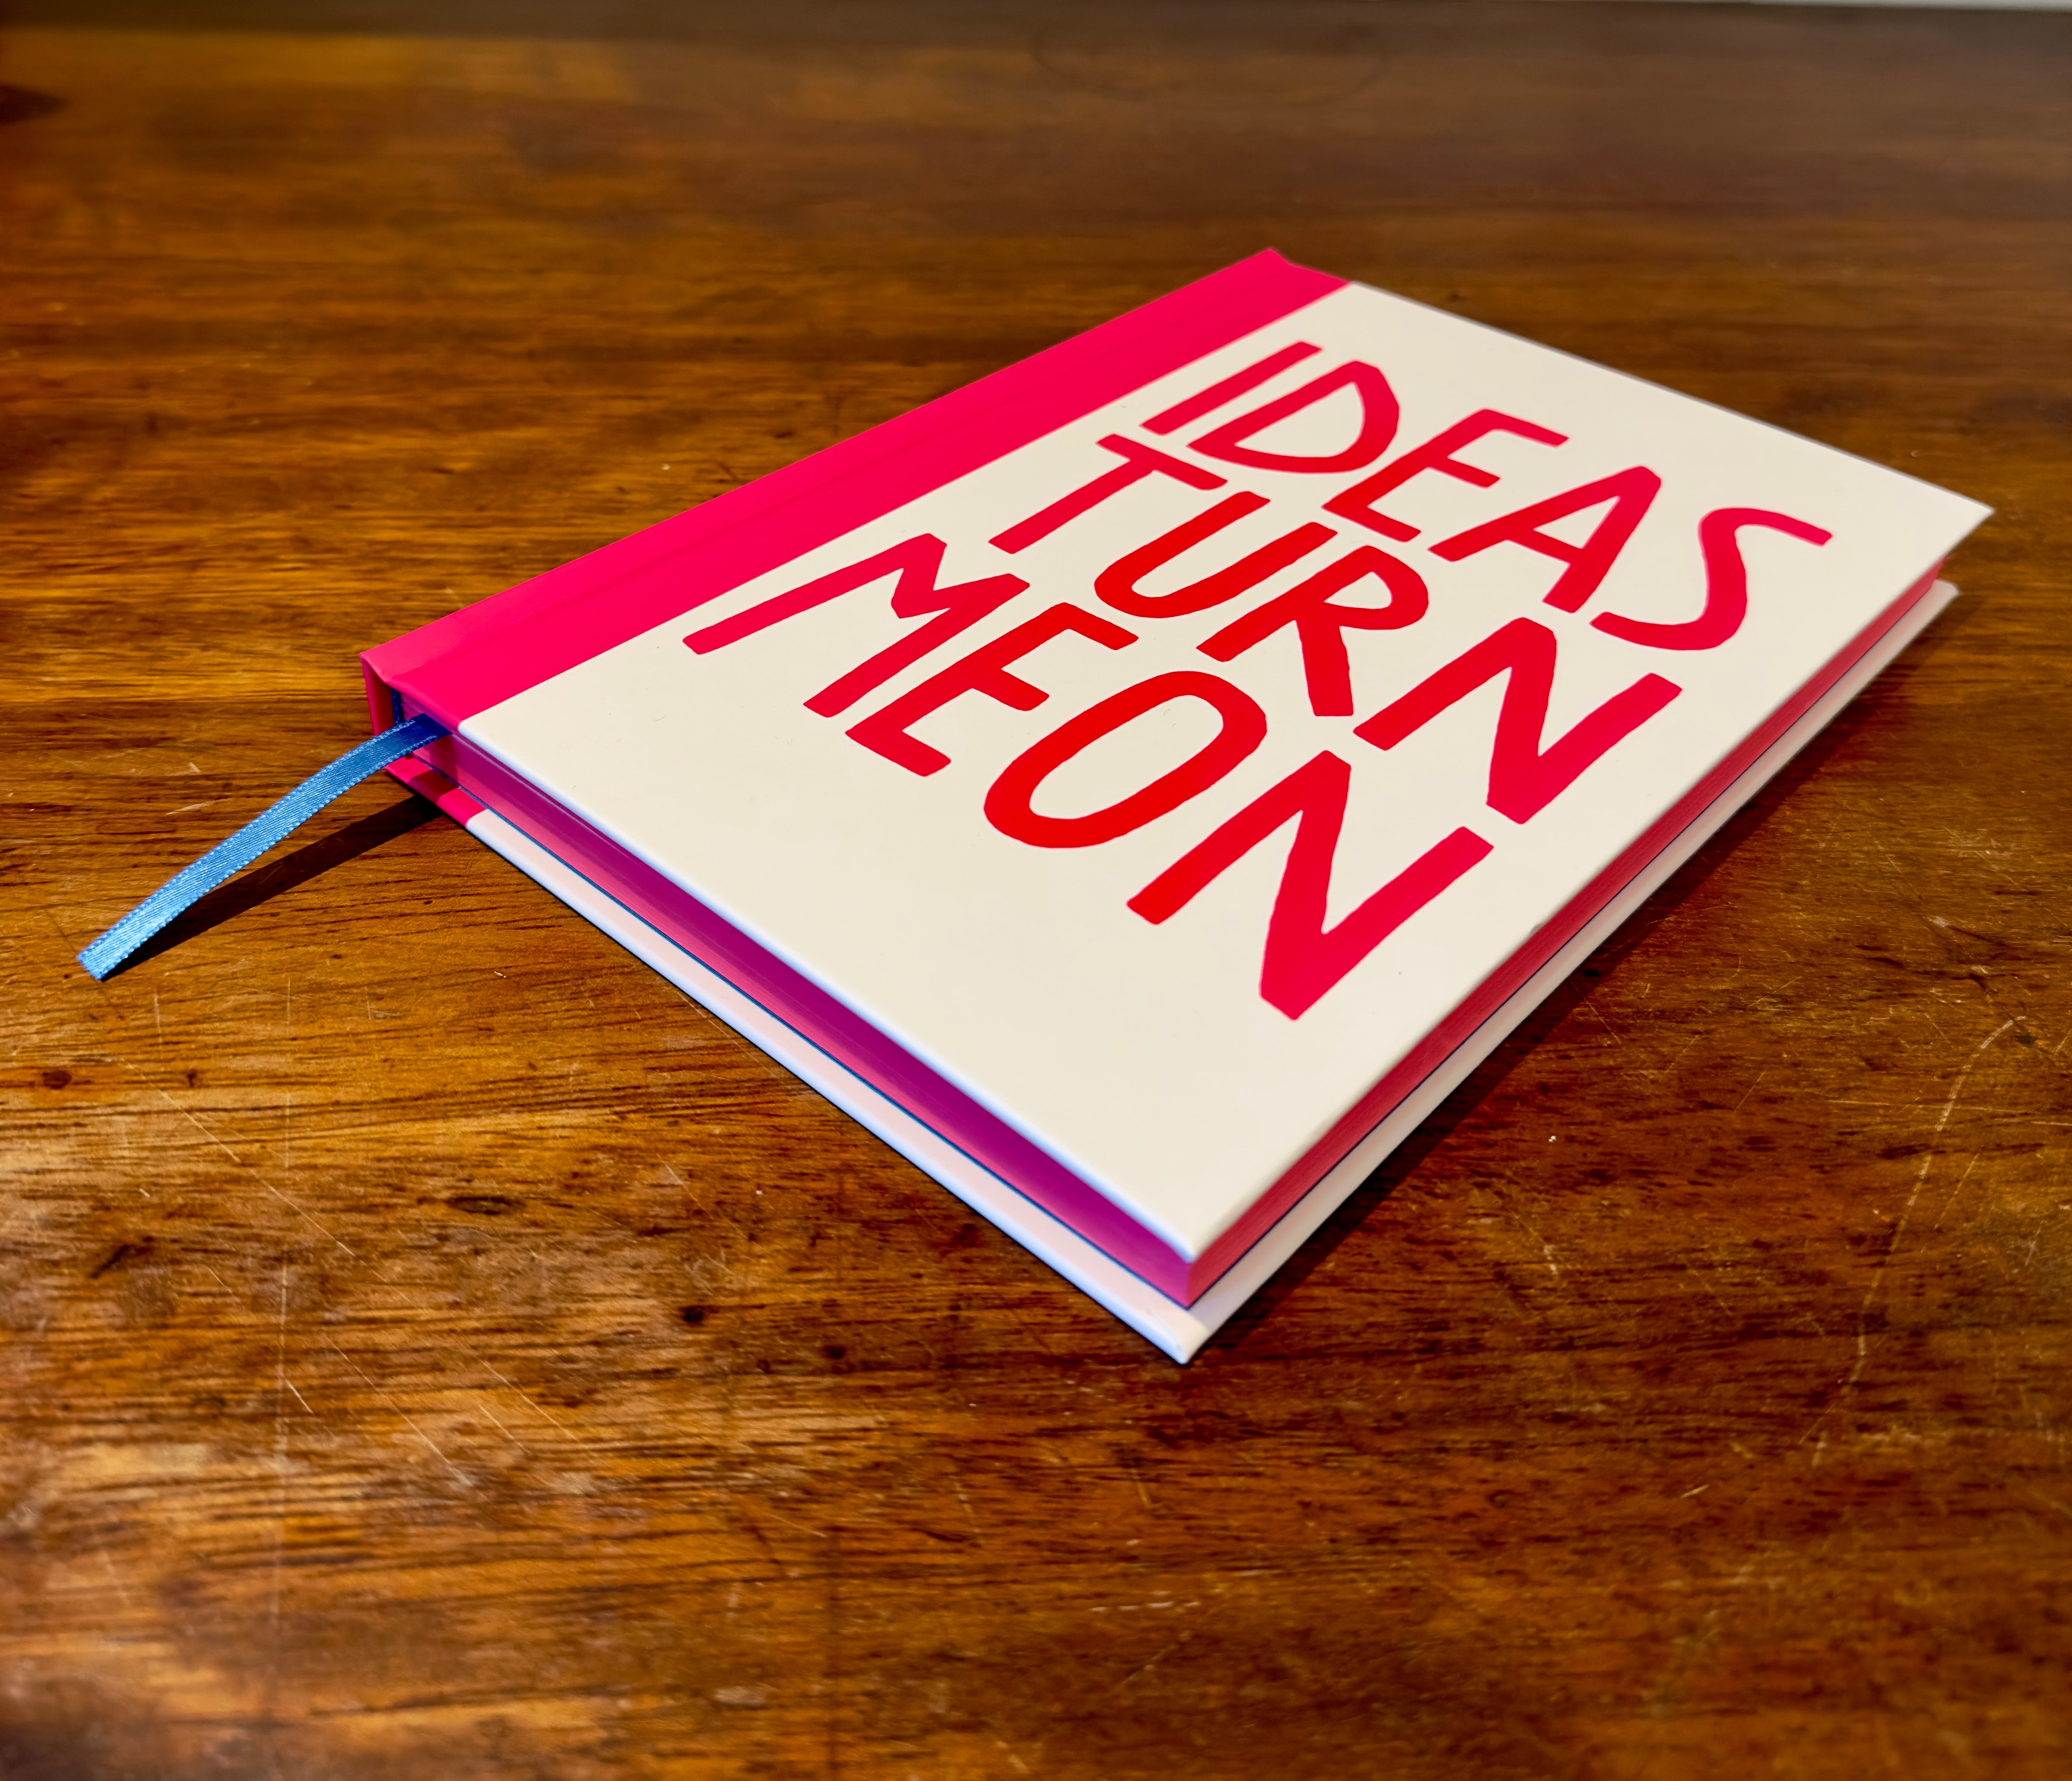 Ideas Turn Me On Notebook